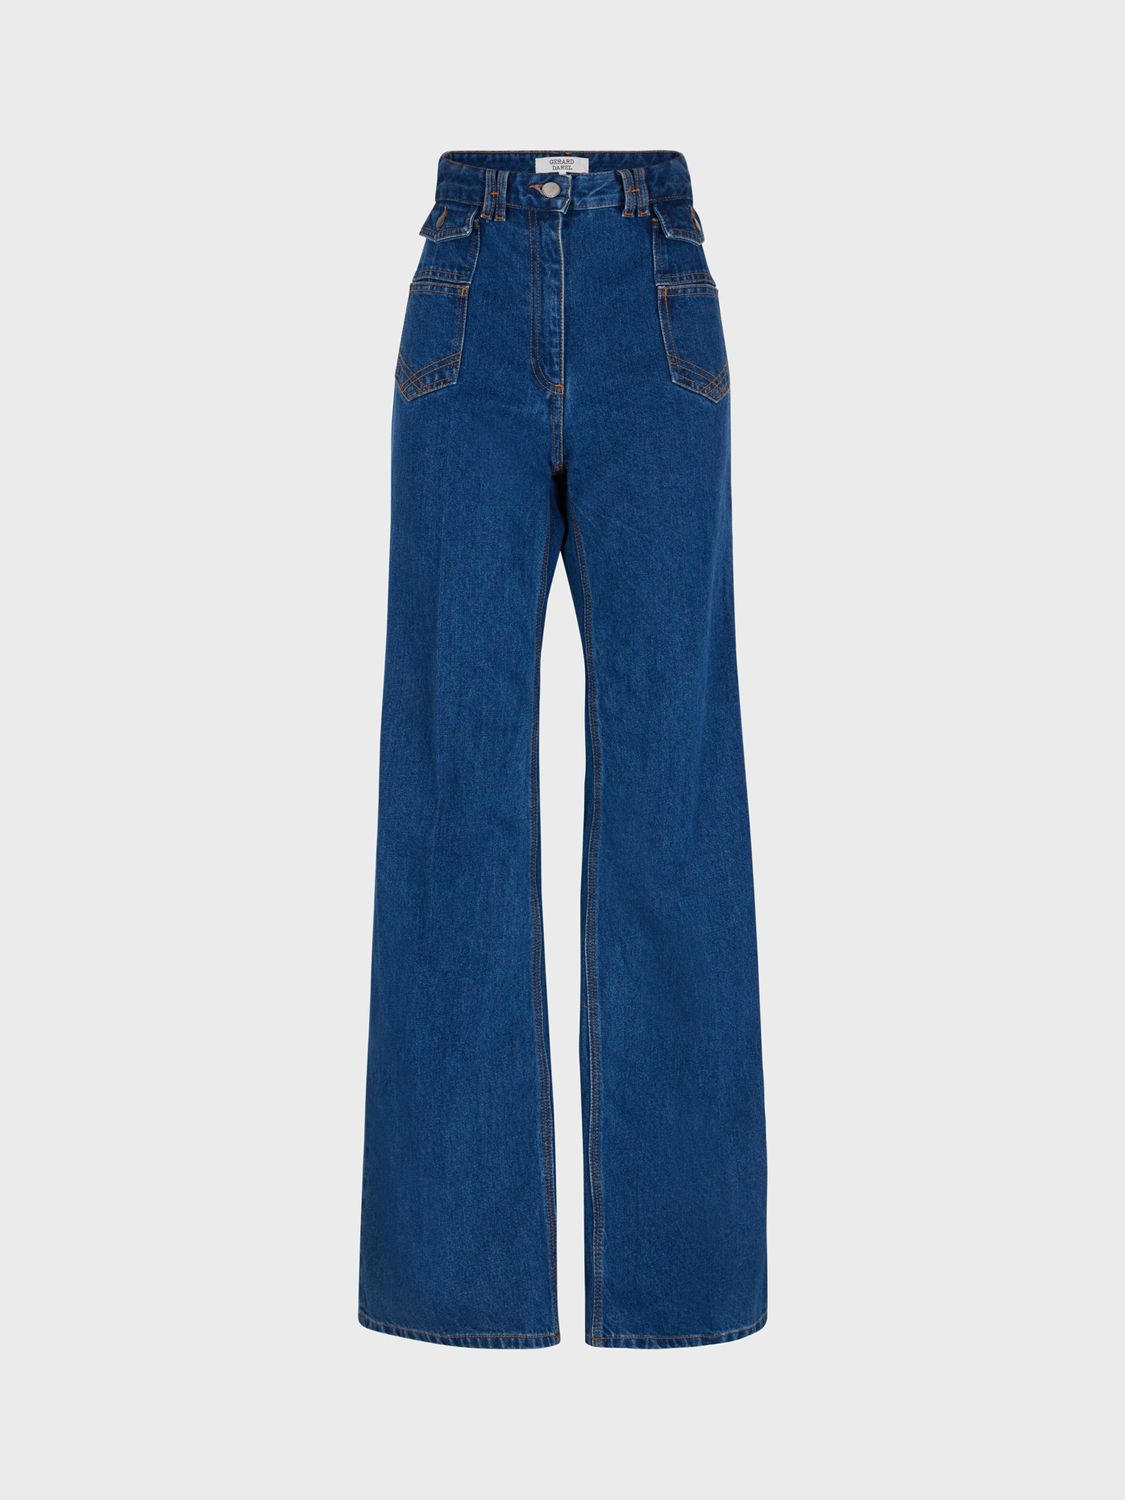 Gerard Darel Anna Flared Jeans, Blue, 8